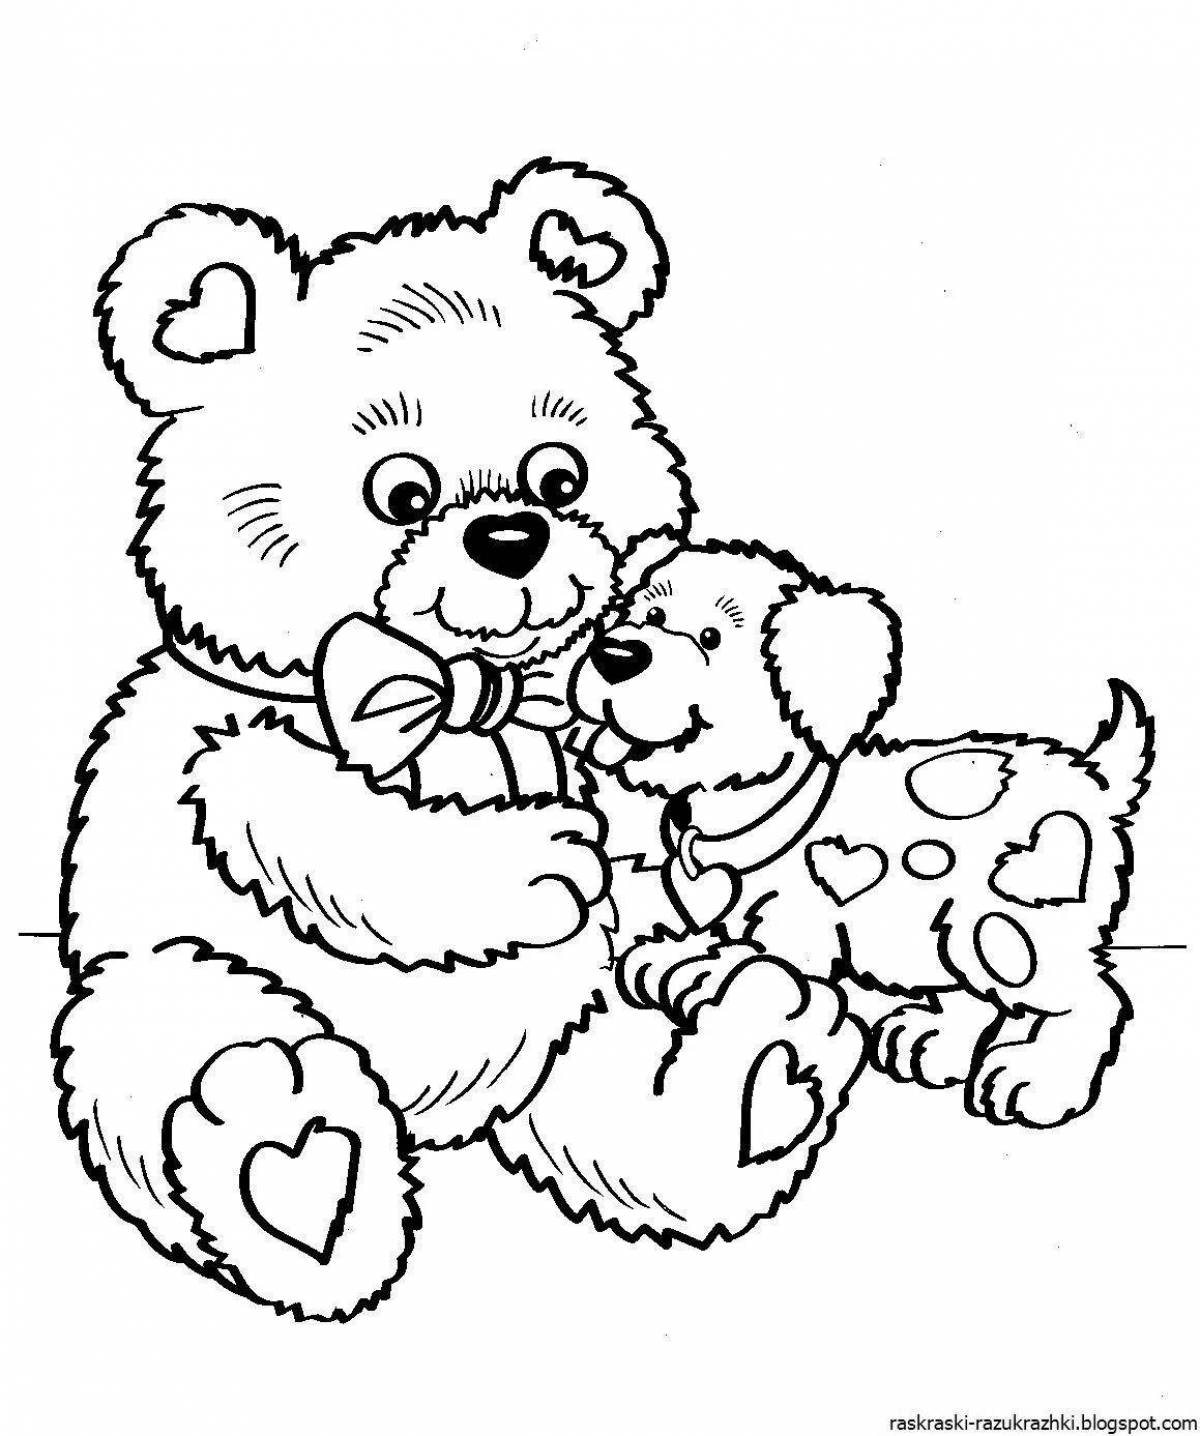 Fun teddy bear coloring book for kids